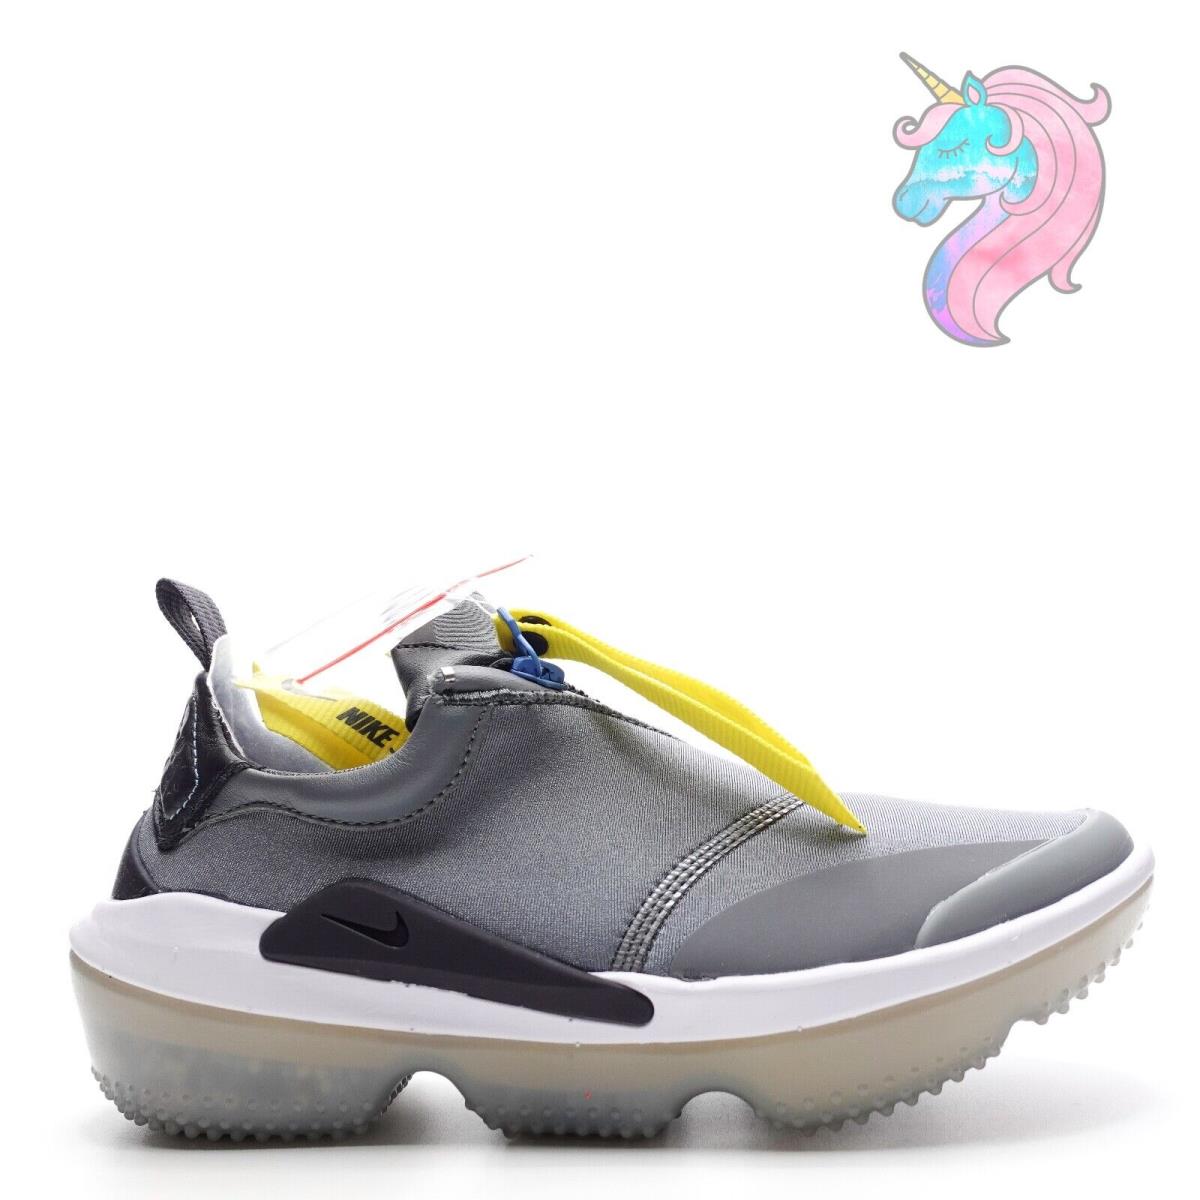 Nike Joyride Optik Cool Grey Oil Grey AJ6844-008 Running Shoes Women`s Size 6 - Gray , Cool Grey/Oil Grey Manufacturer